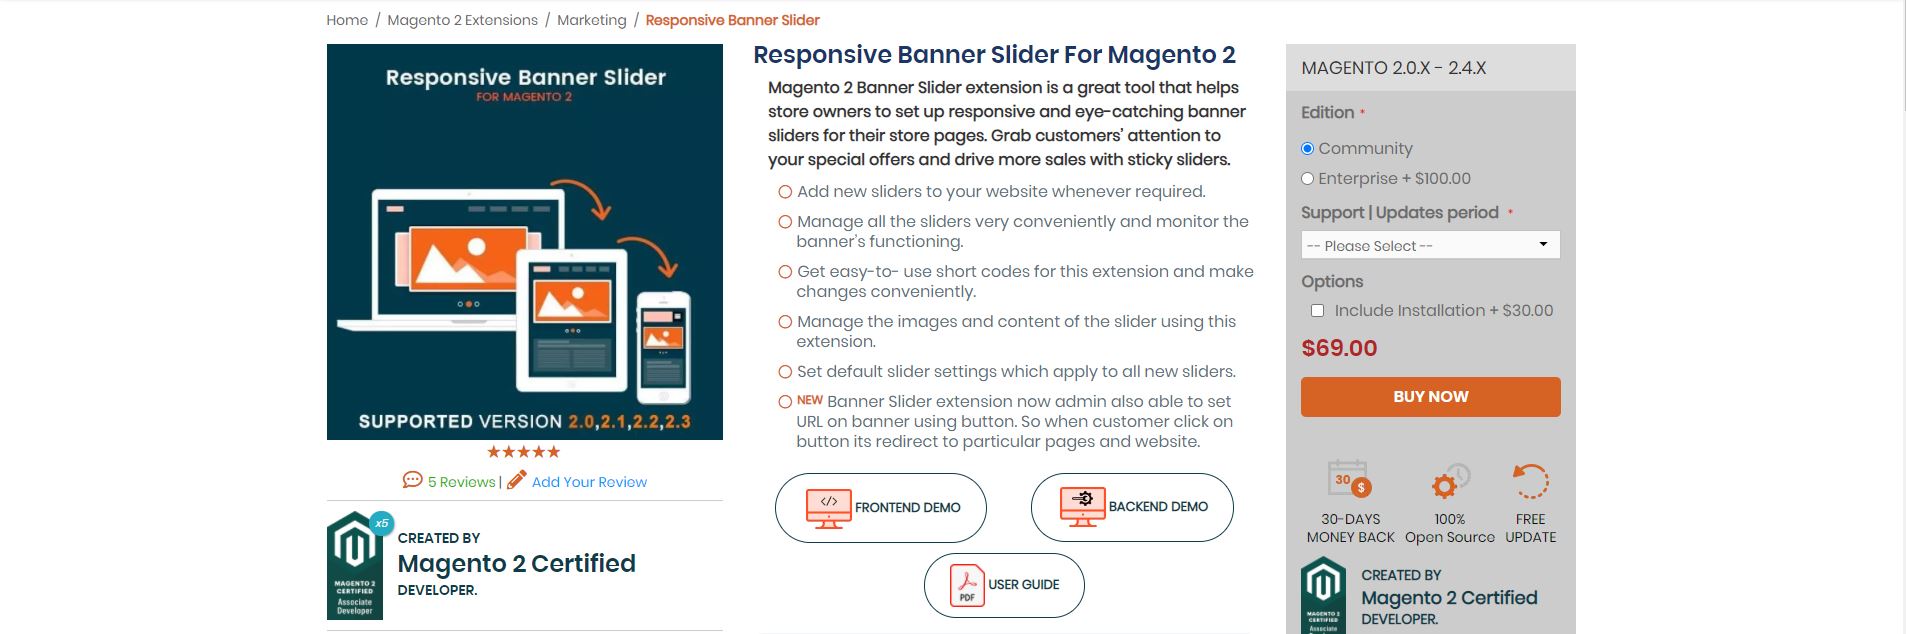 Magento banner slider extension: